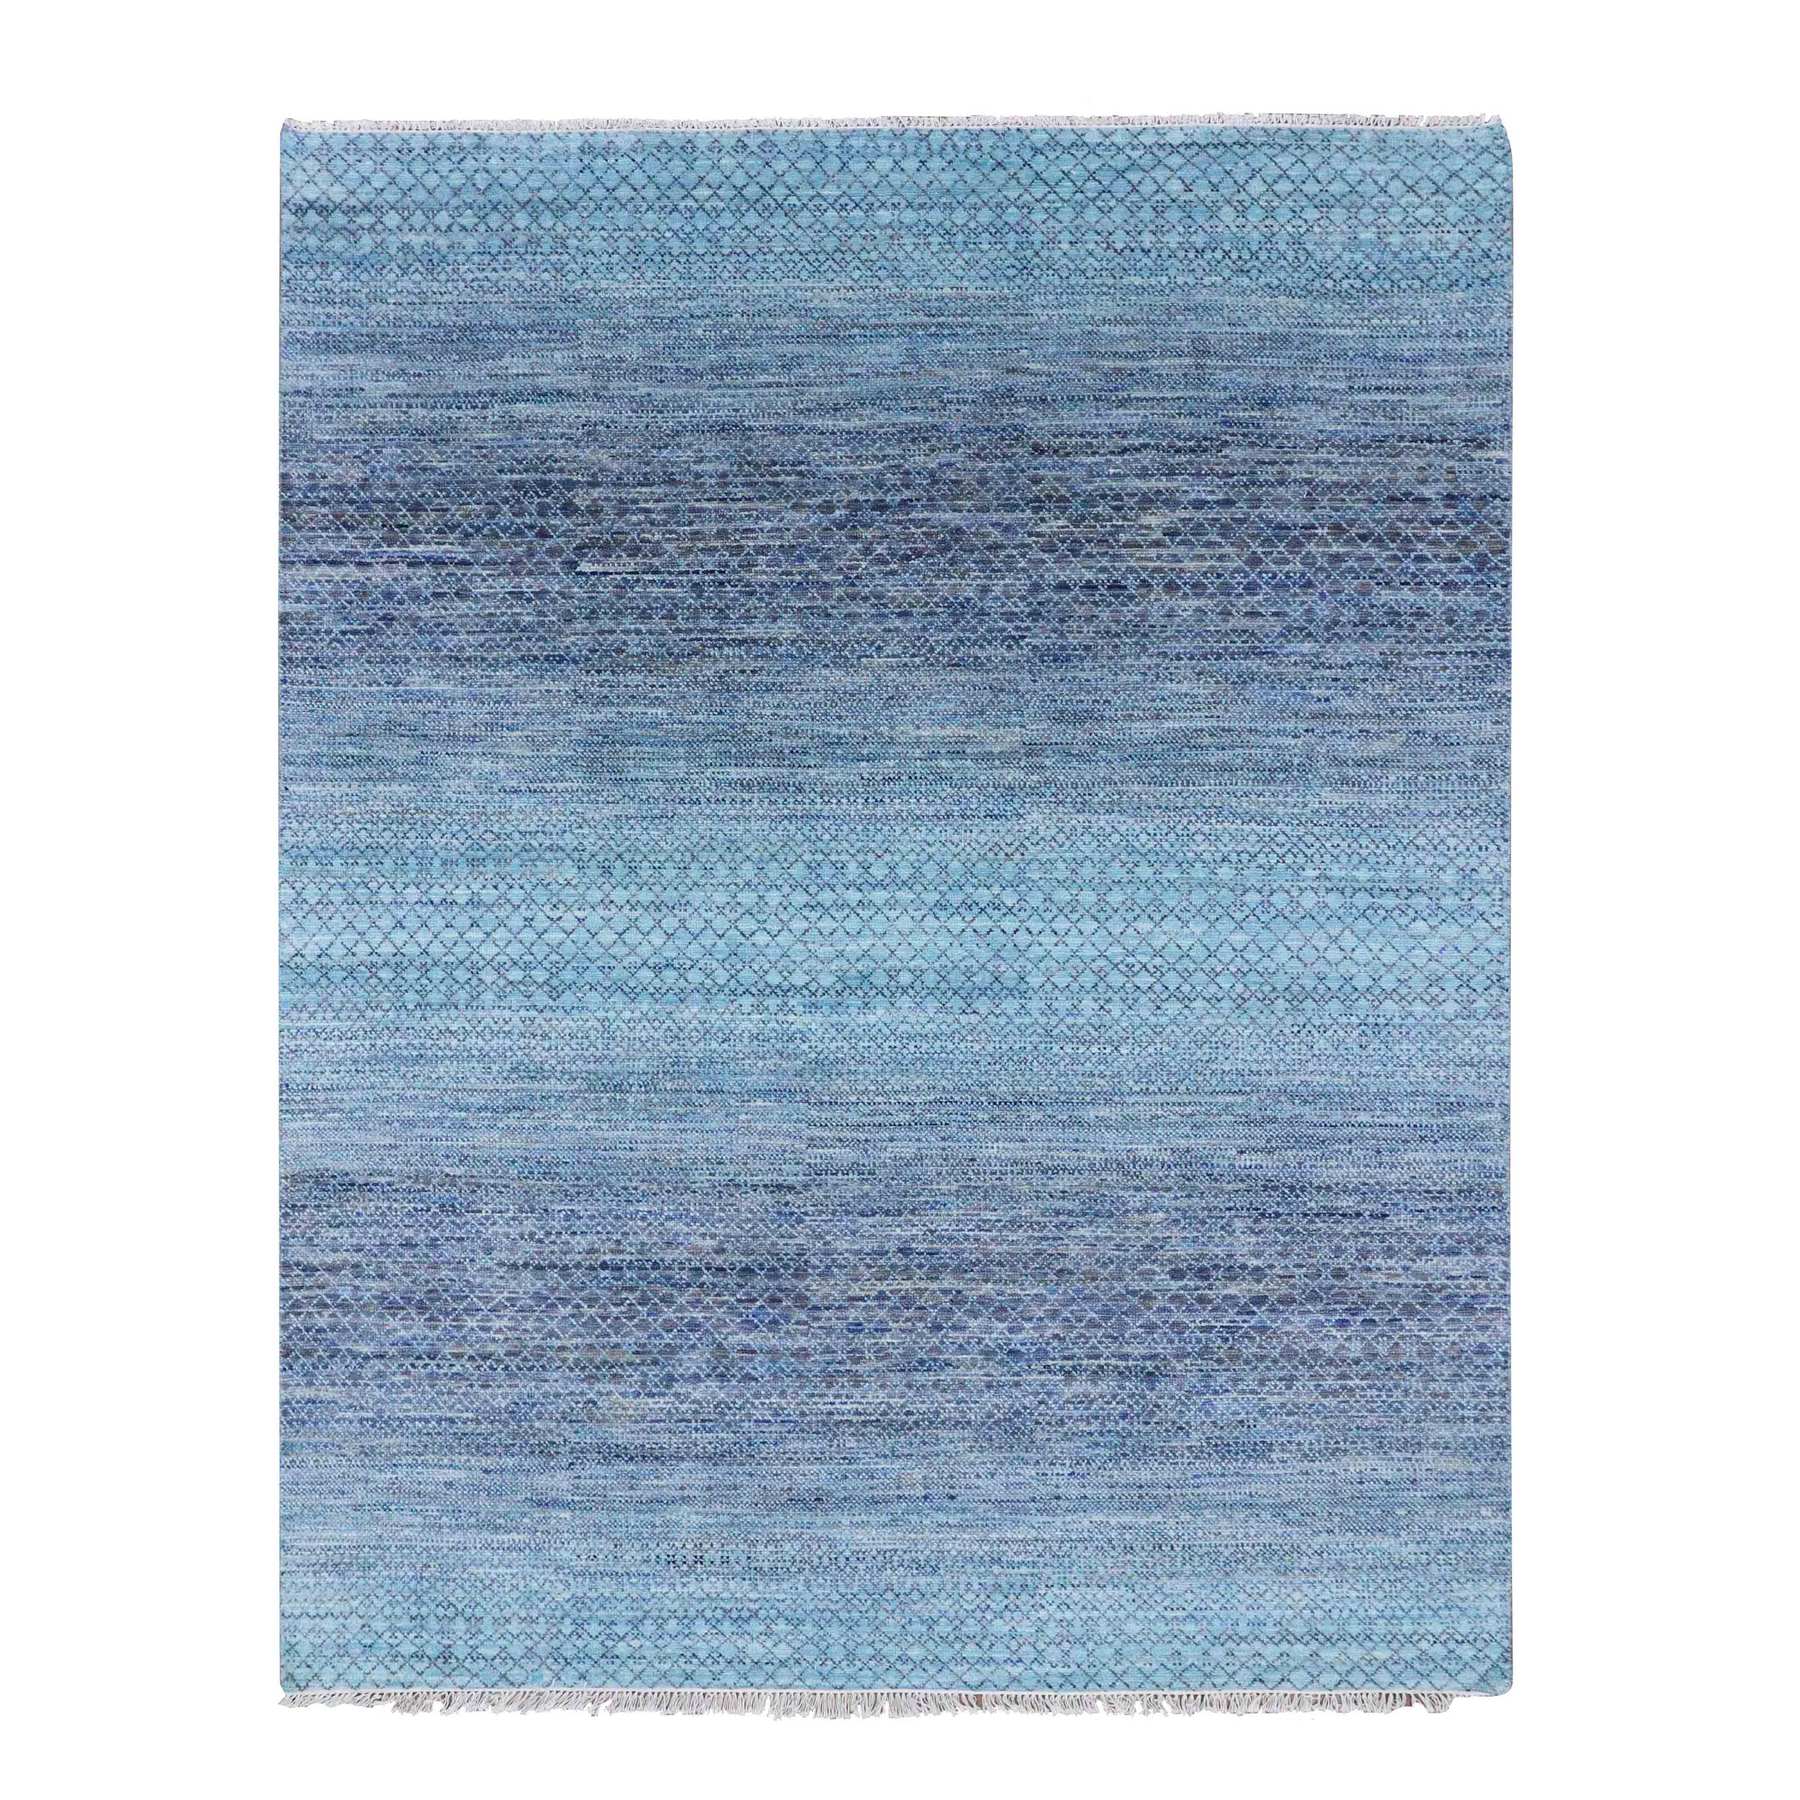 8'x10'3" Light Blue, Wool and Silk Densely Woven Modern Chiaroscuro Design Gabbeh, Hand Woven, Oriental Rug 